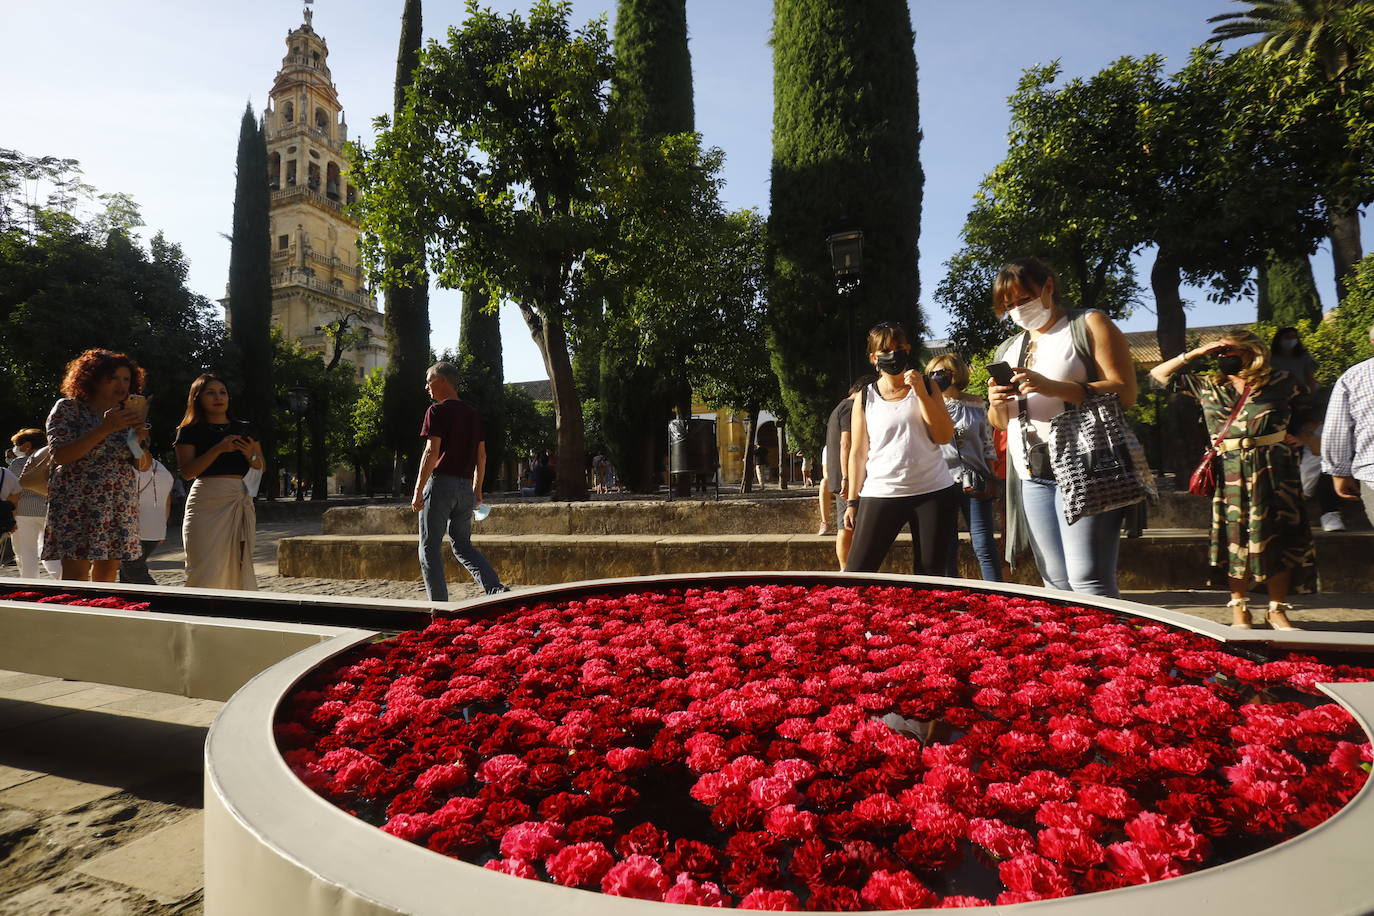 Festival Flora Córdoba | El lleno de la primera jornada en imágenes (II)